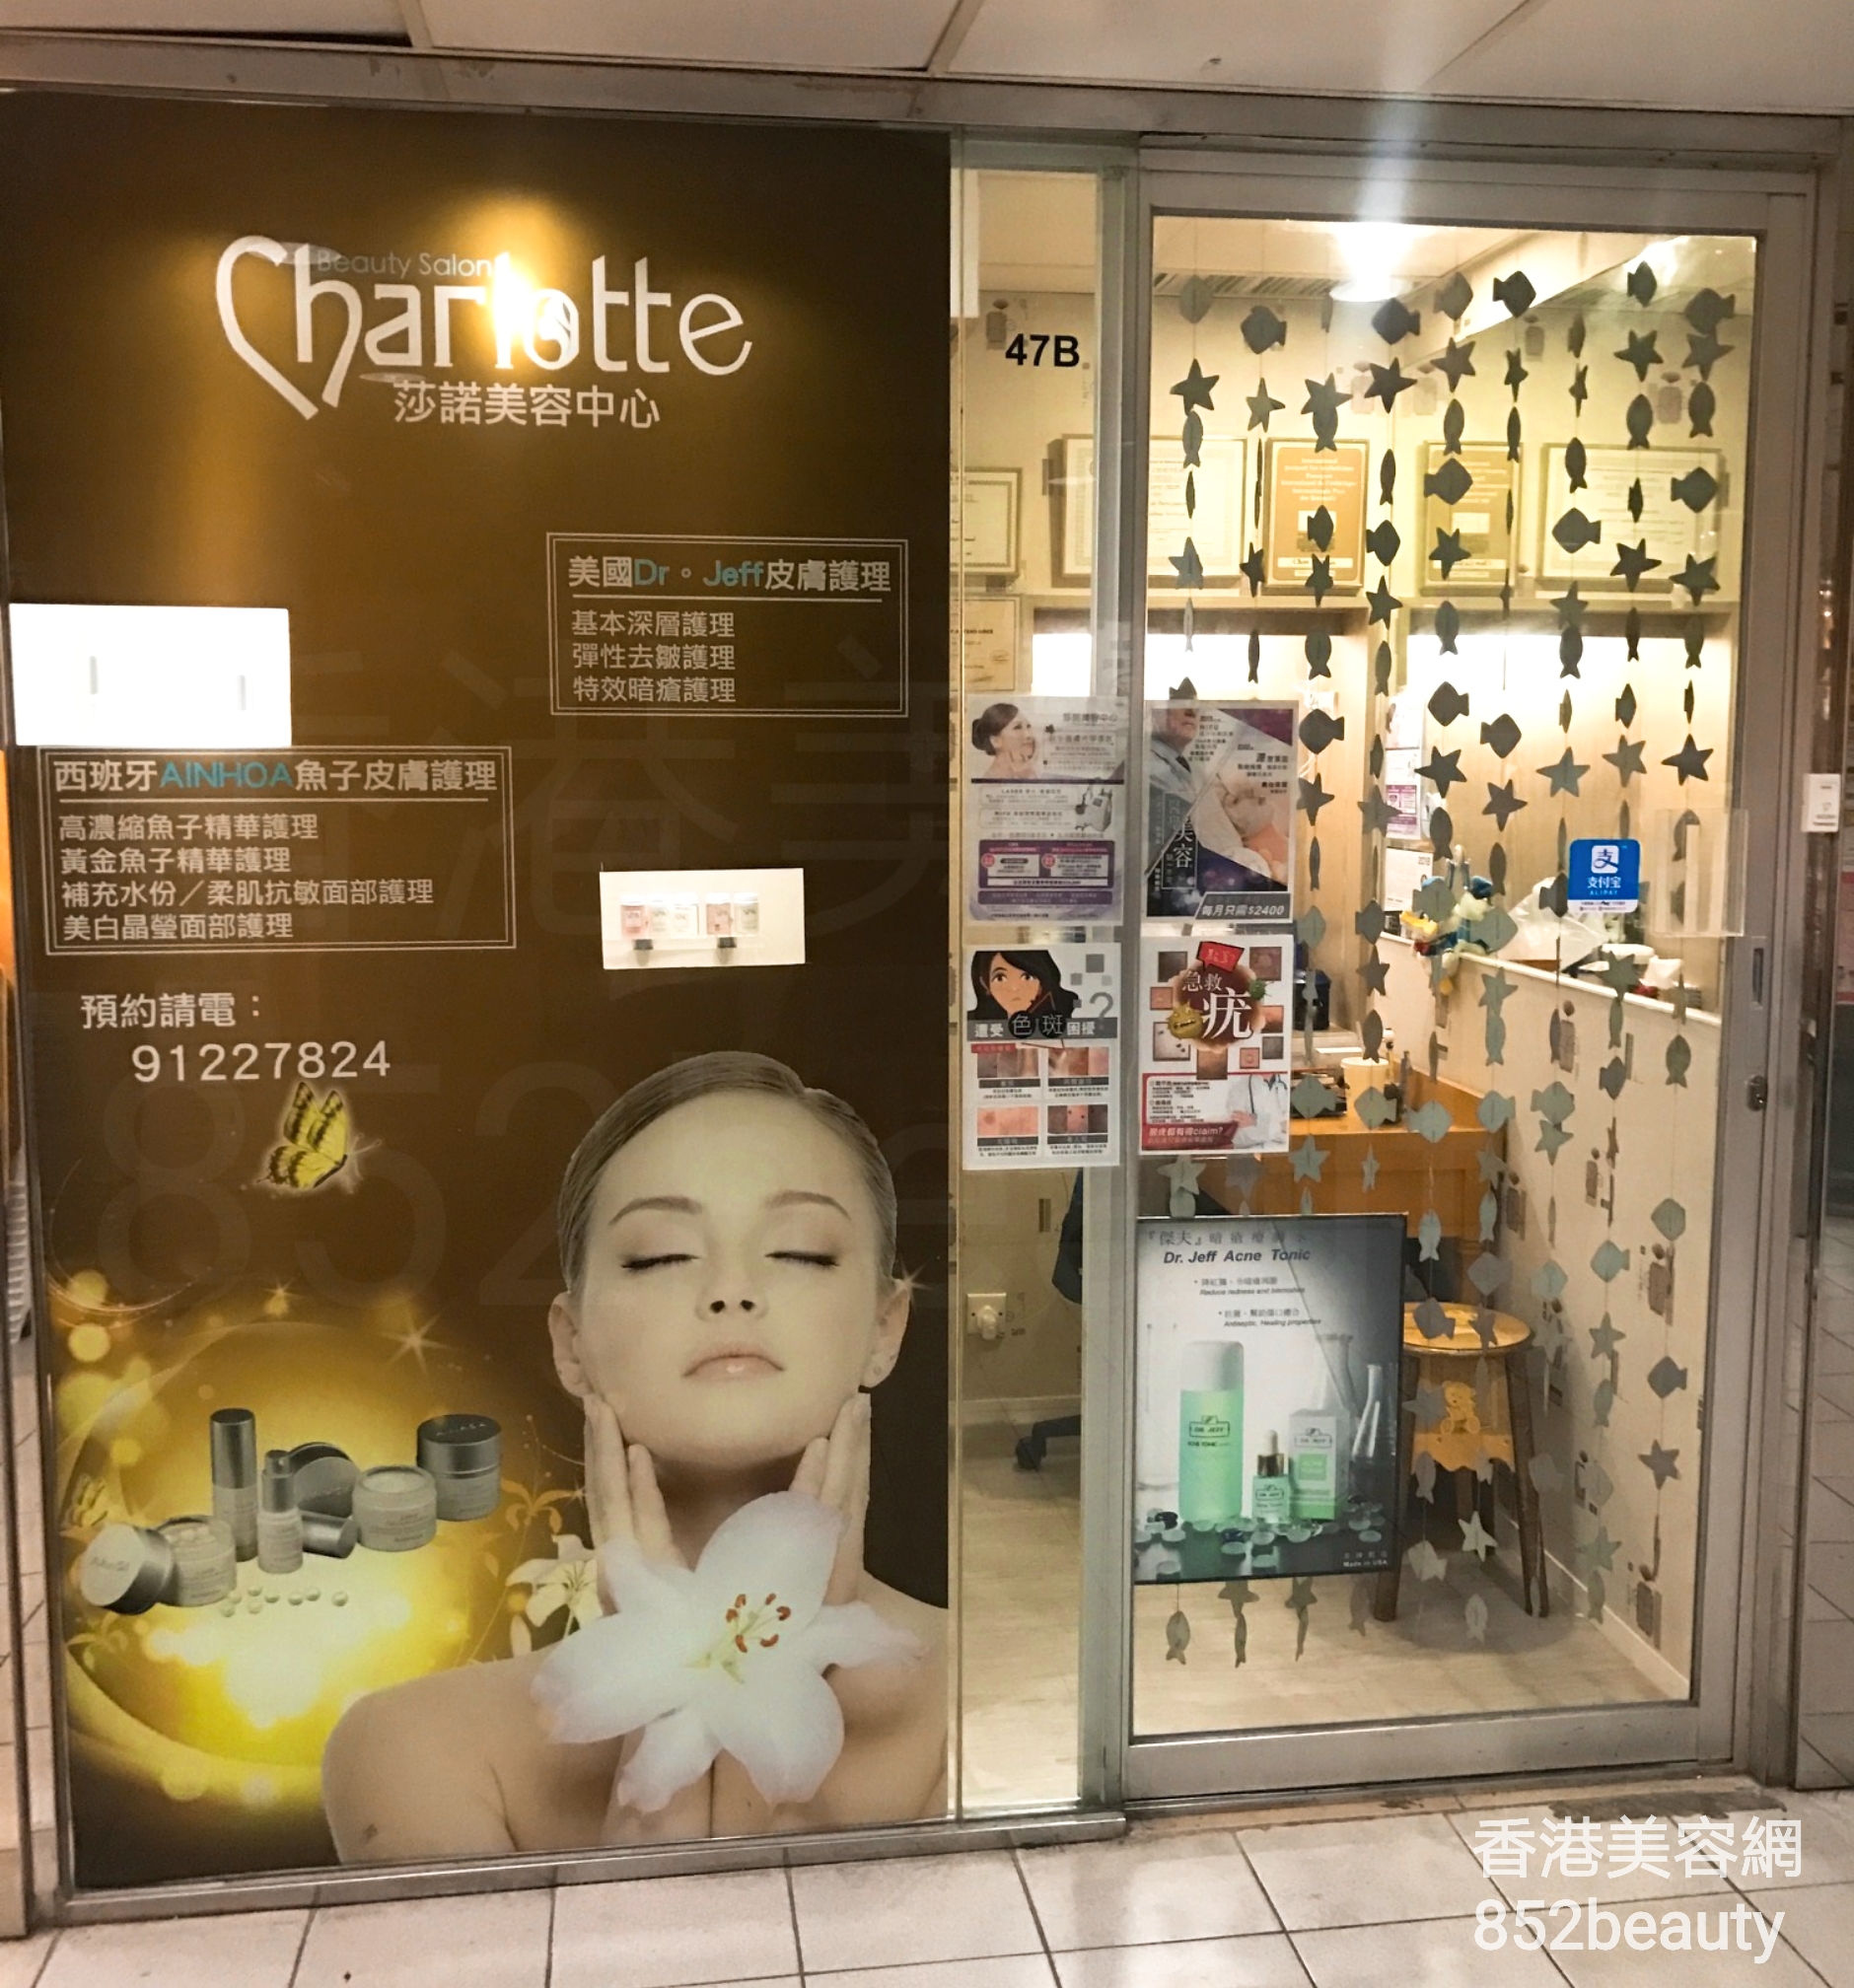 修眉/眼睫毛: 莎諾美容中心 Charlotte Beauty Salon